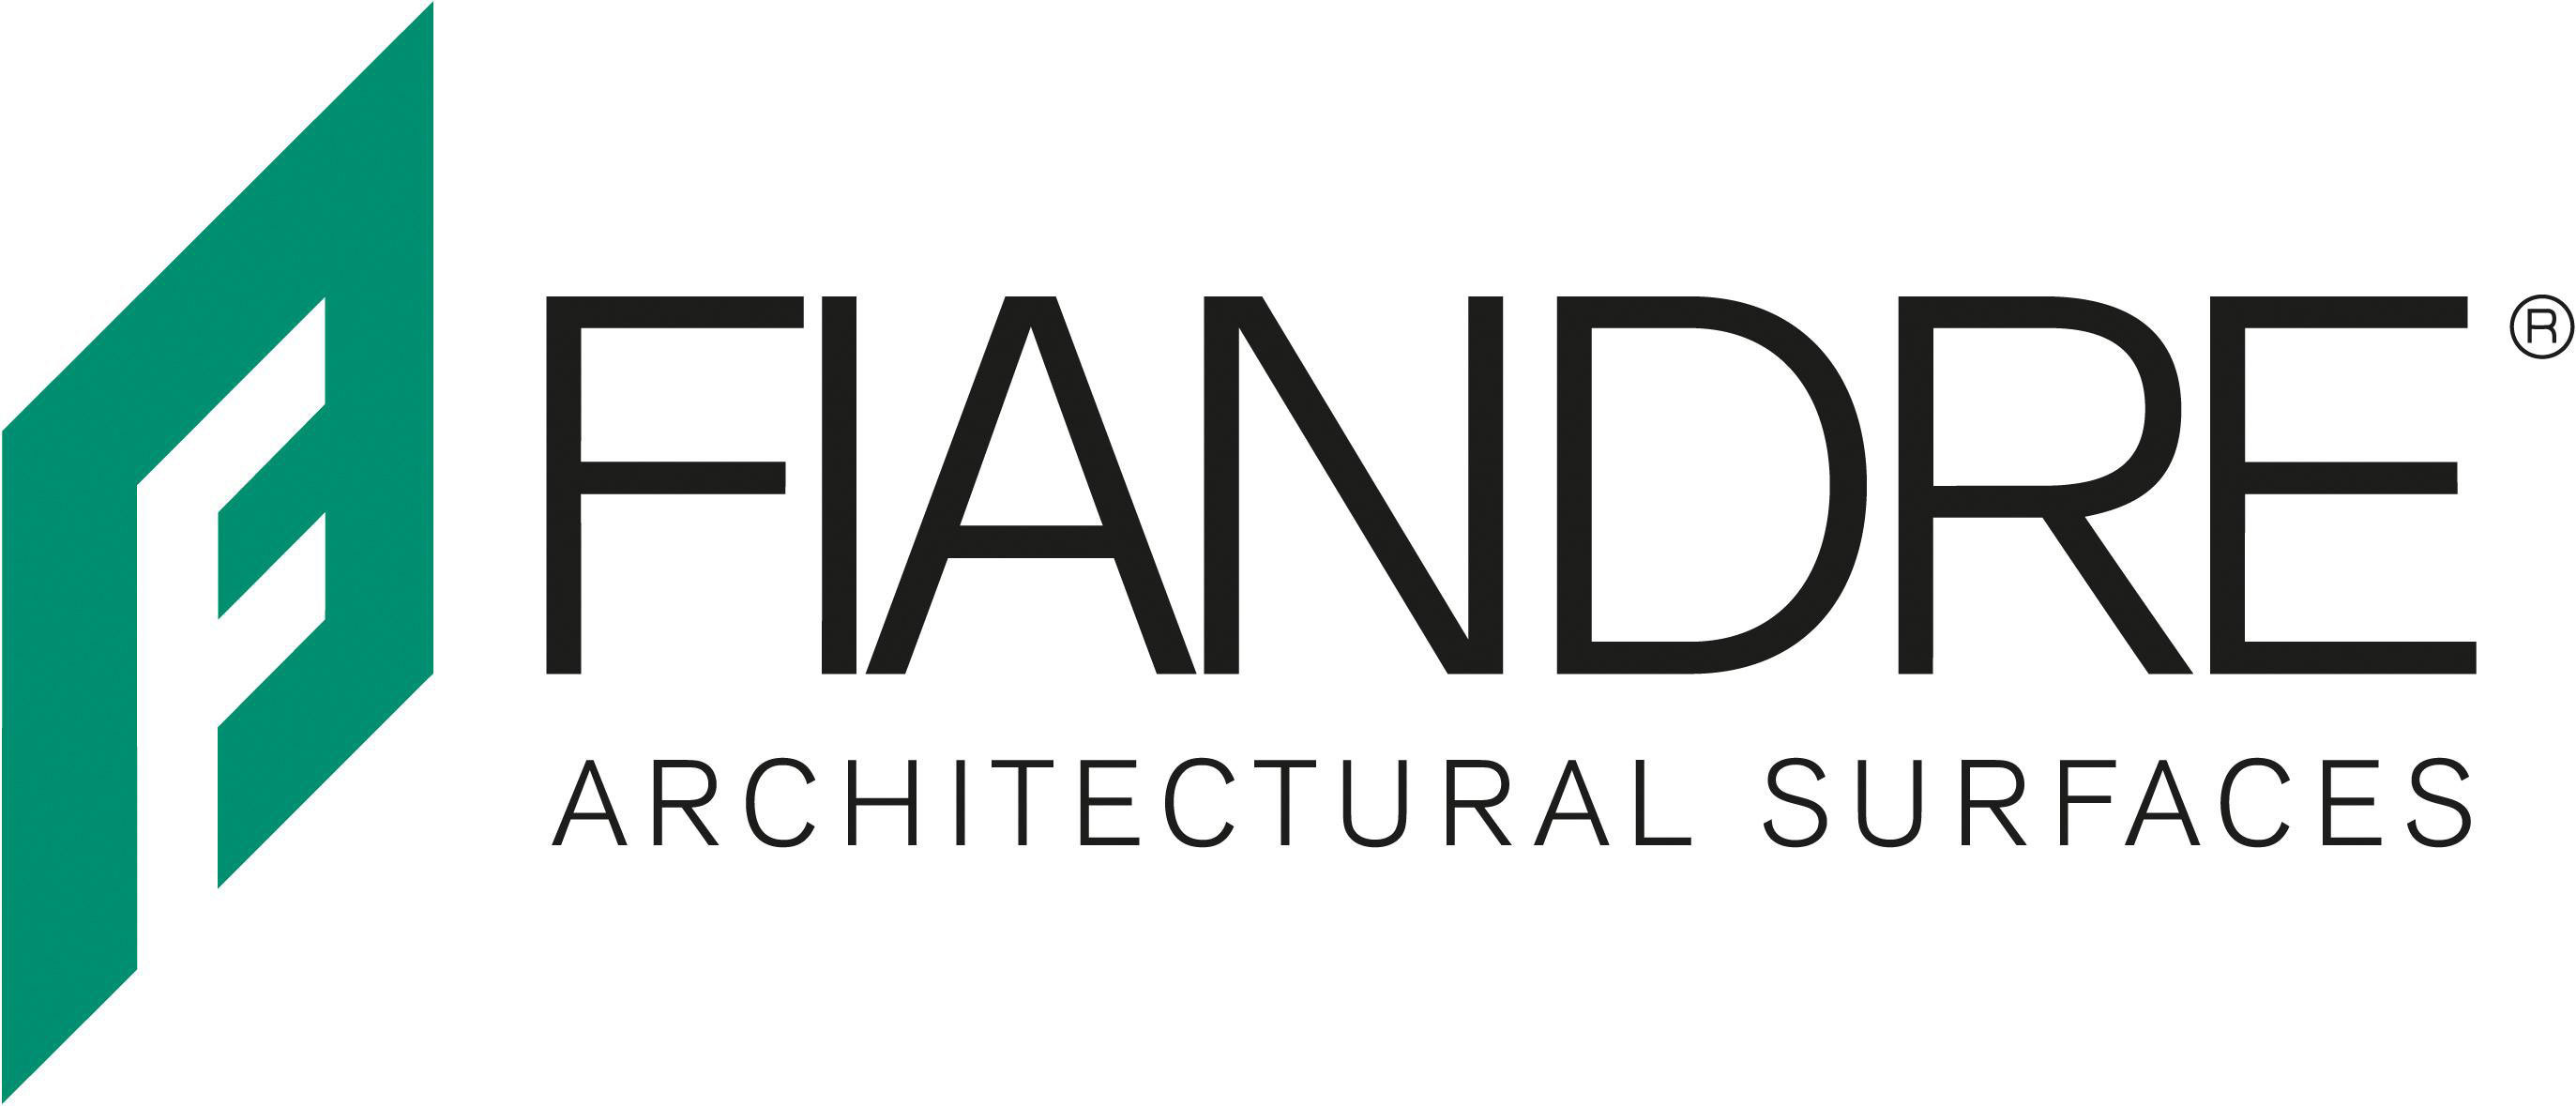 graniti_fiandre_logo